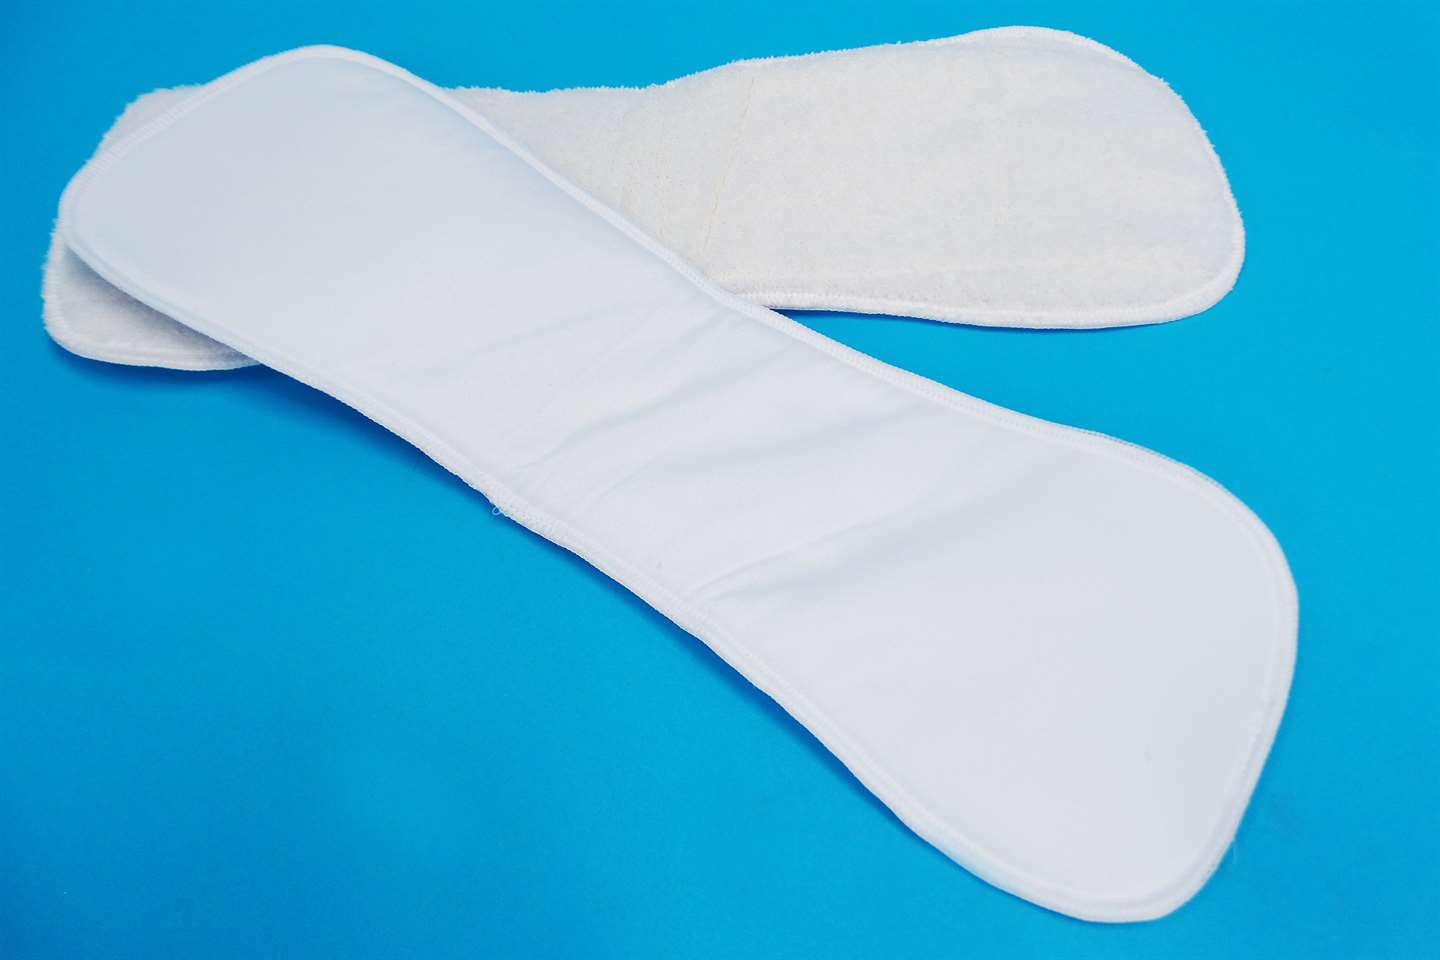 Large washable pads